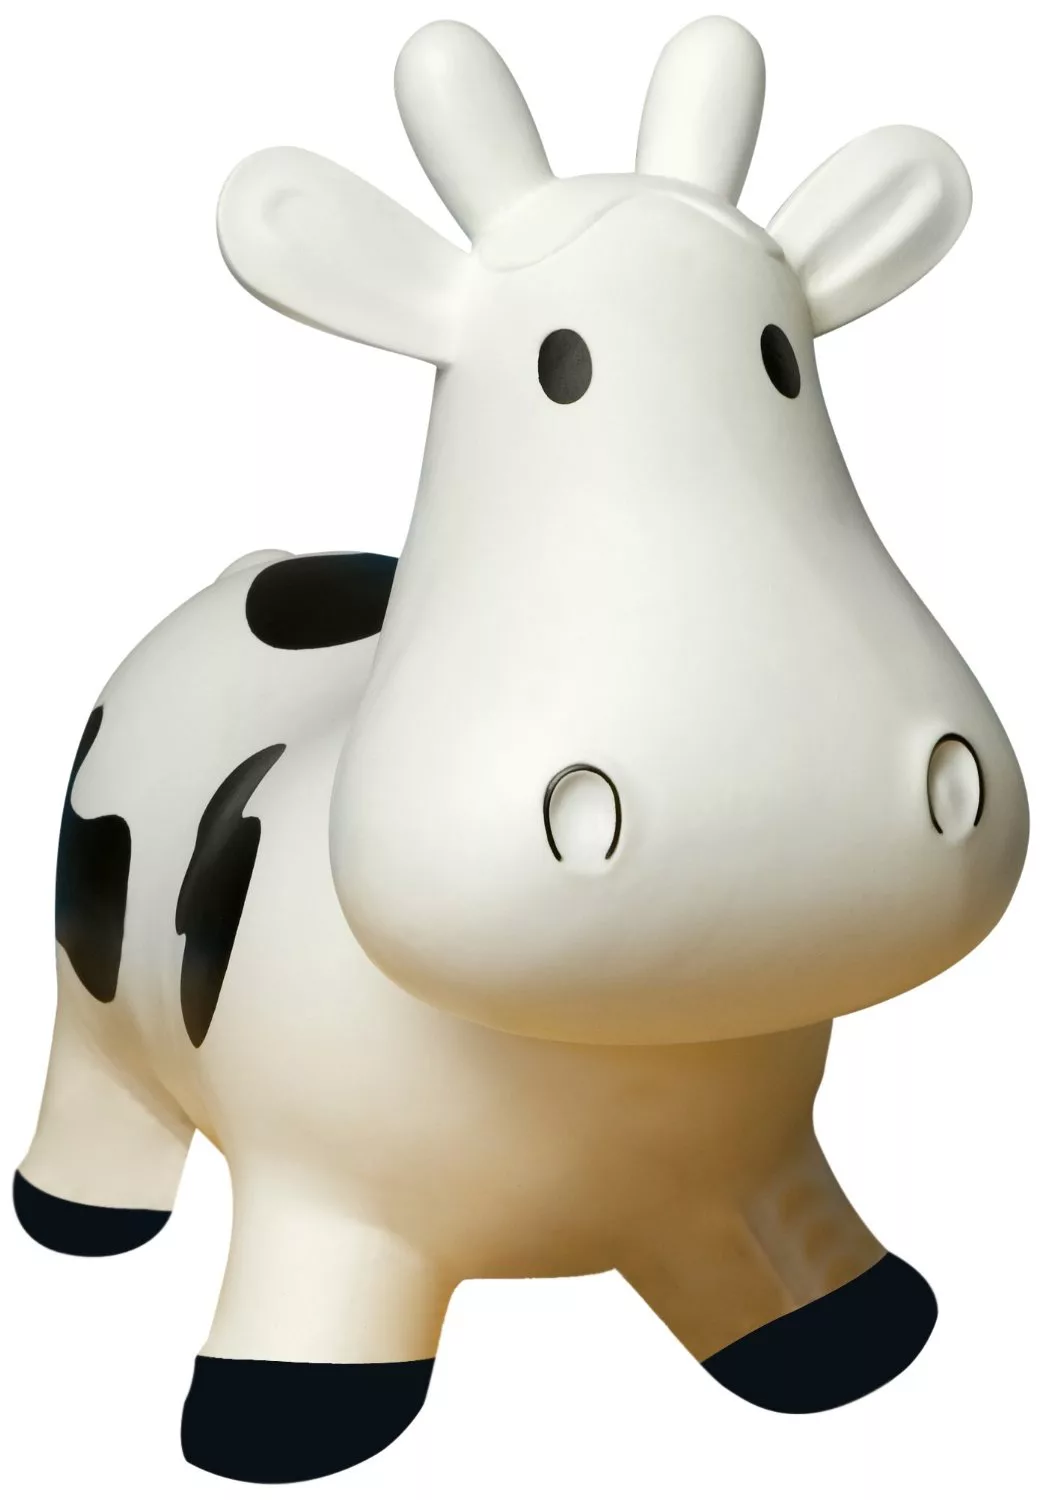 Trumpette Howdy Bouncy Rubber Cow